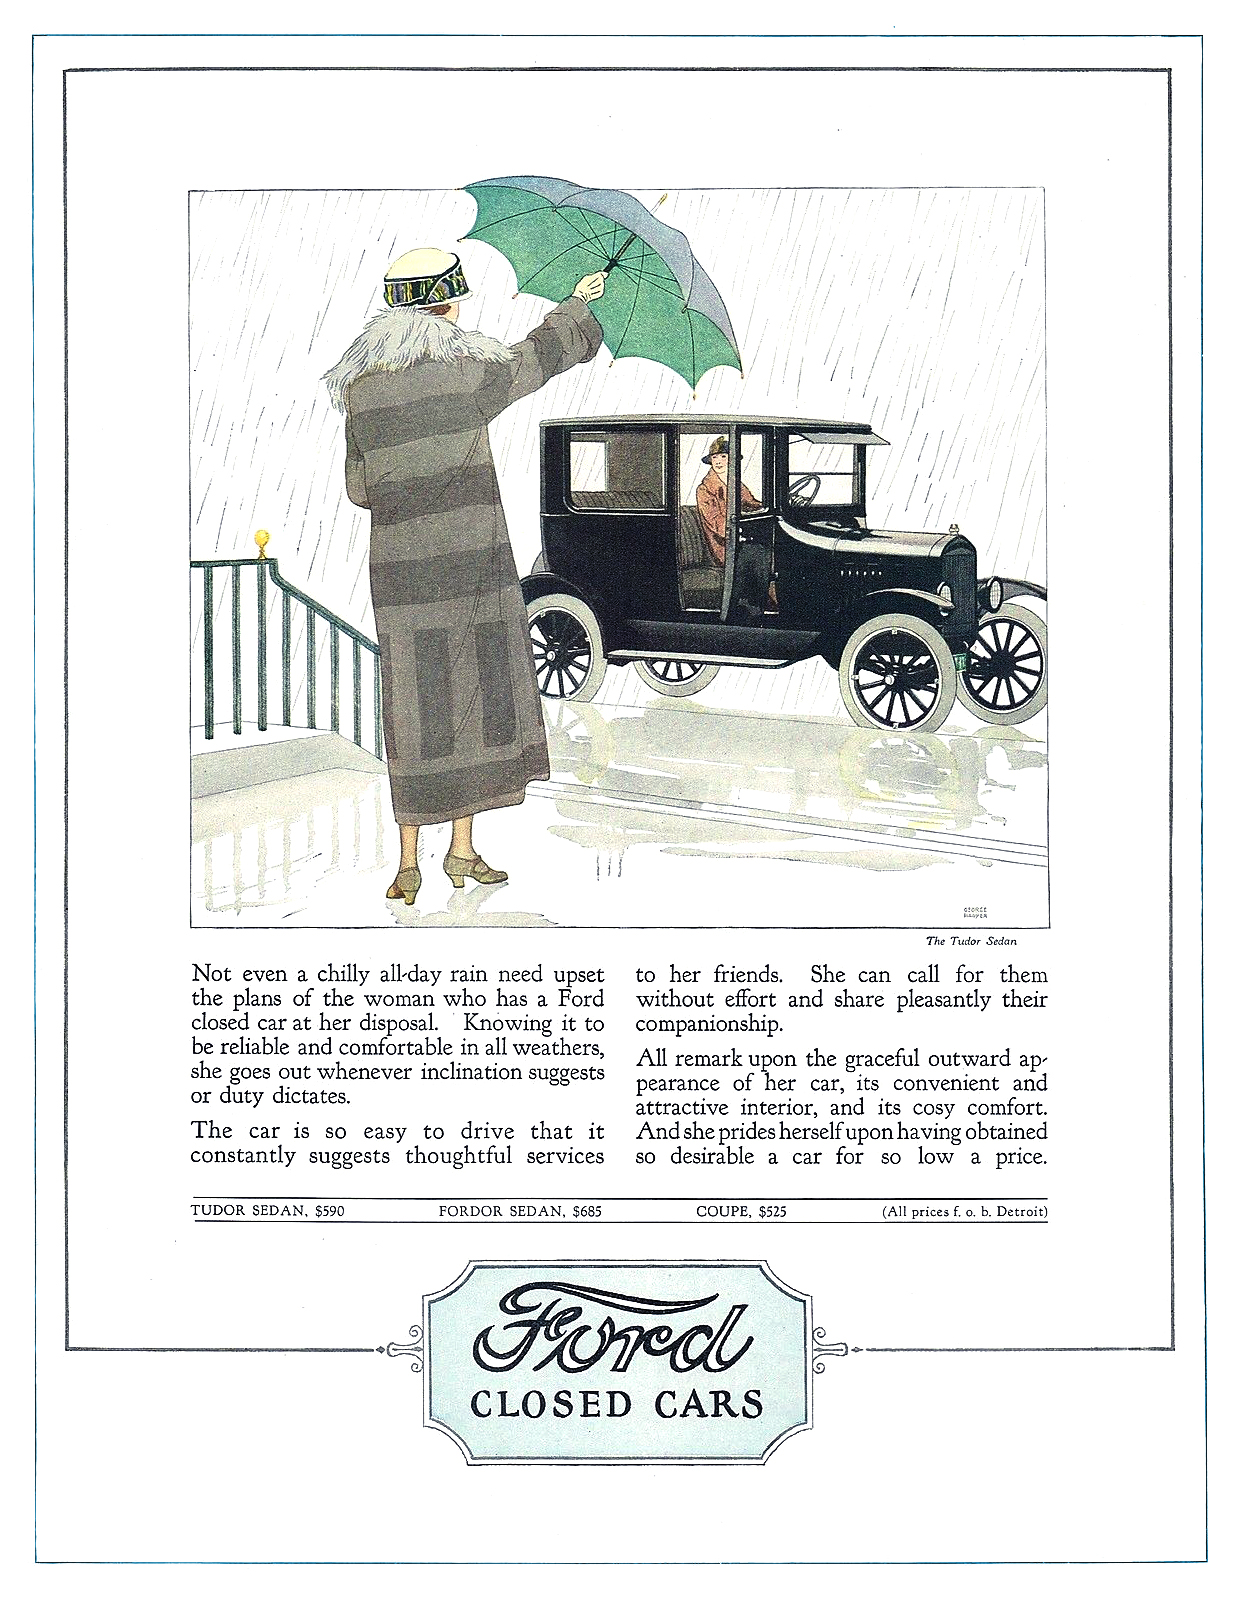 Ford Model T Tudor Sedan Ad (March, 1924) - Illustrated by George Harper